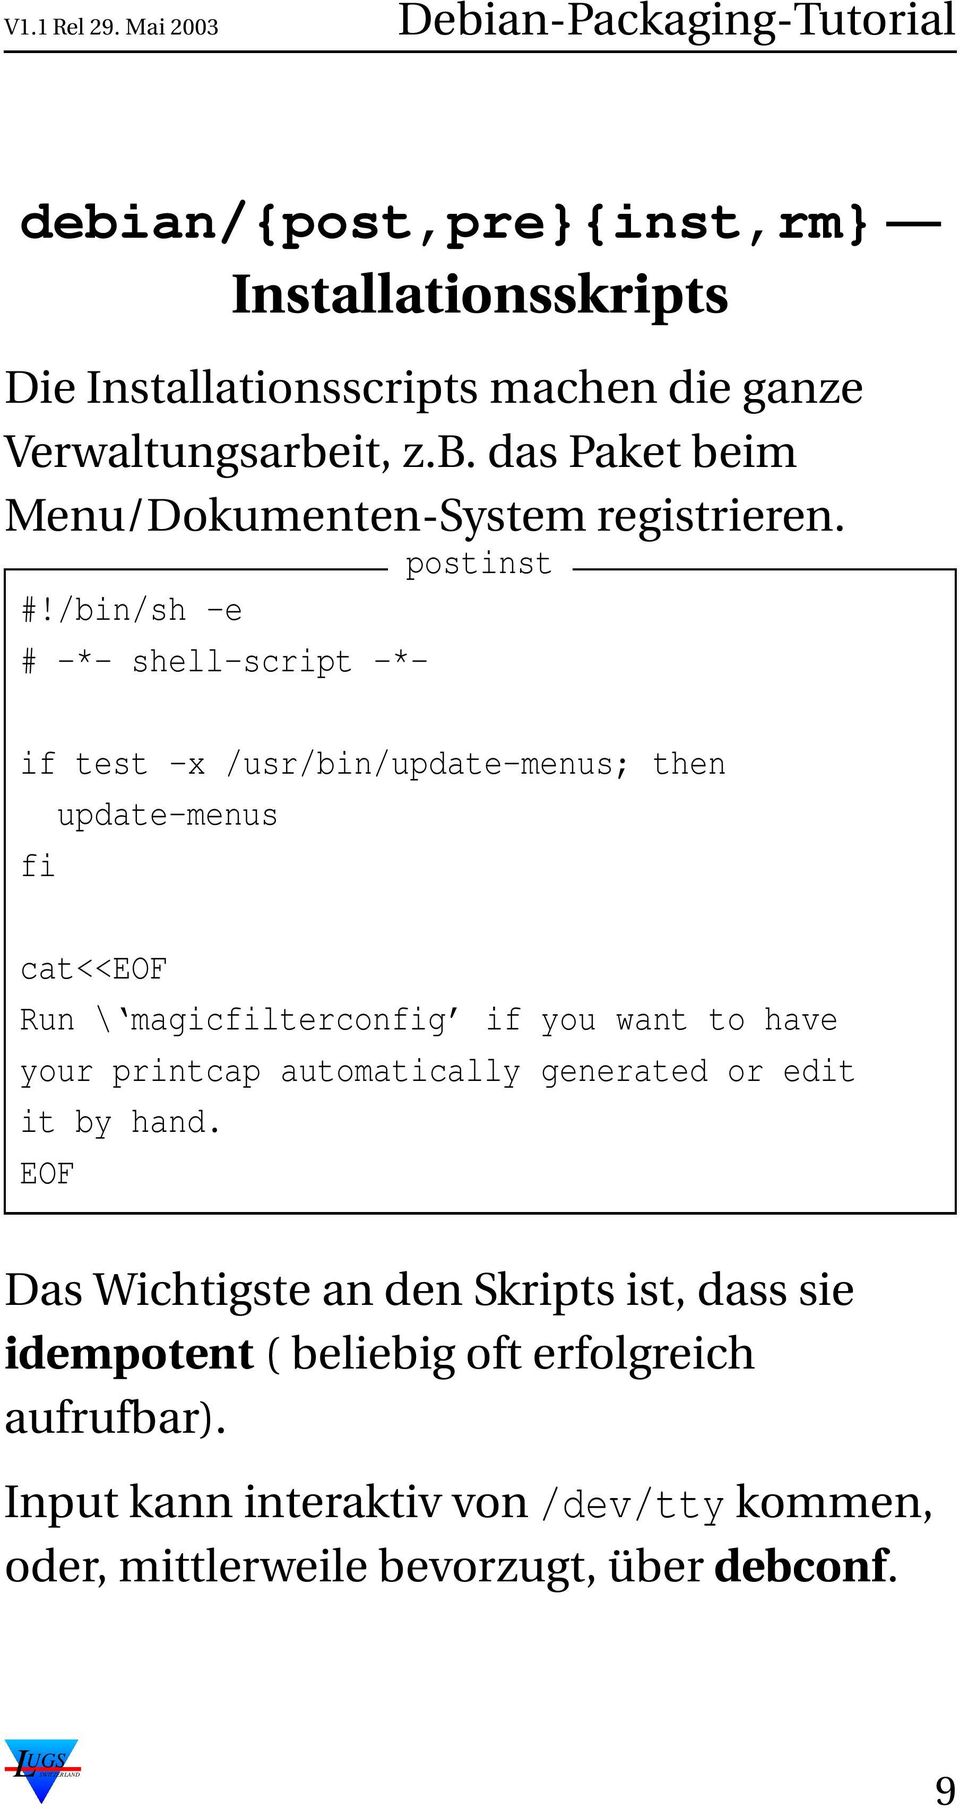 /bin/sh -e # -*- shell-script -*- if test -x /usr/bin/update-menus; then update-menus fi cat<<eof Run \ magicfilterconfig if you want to